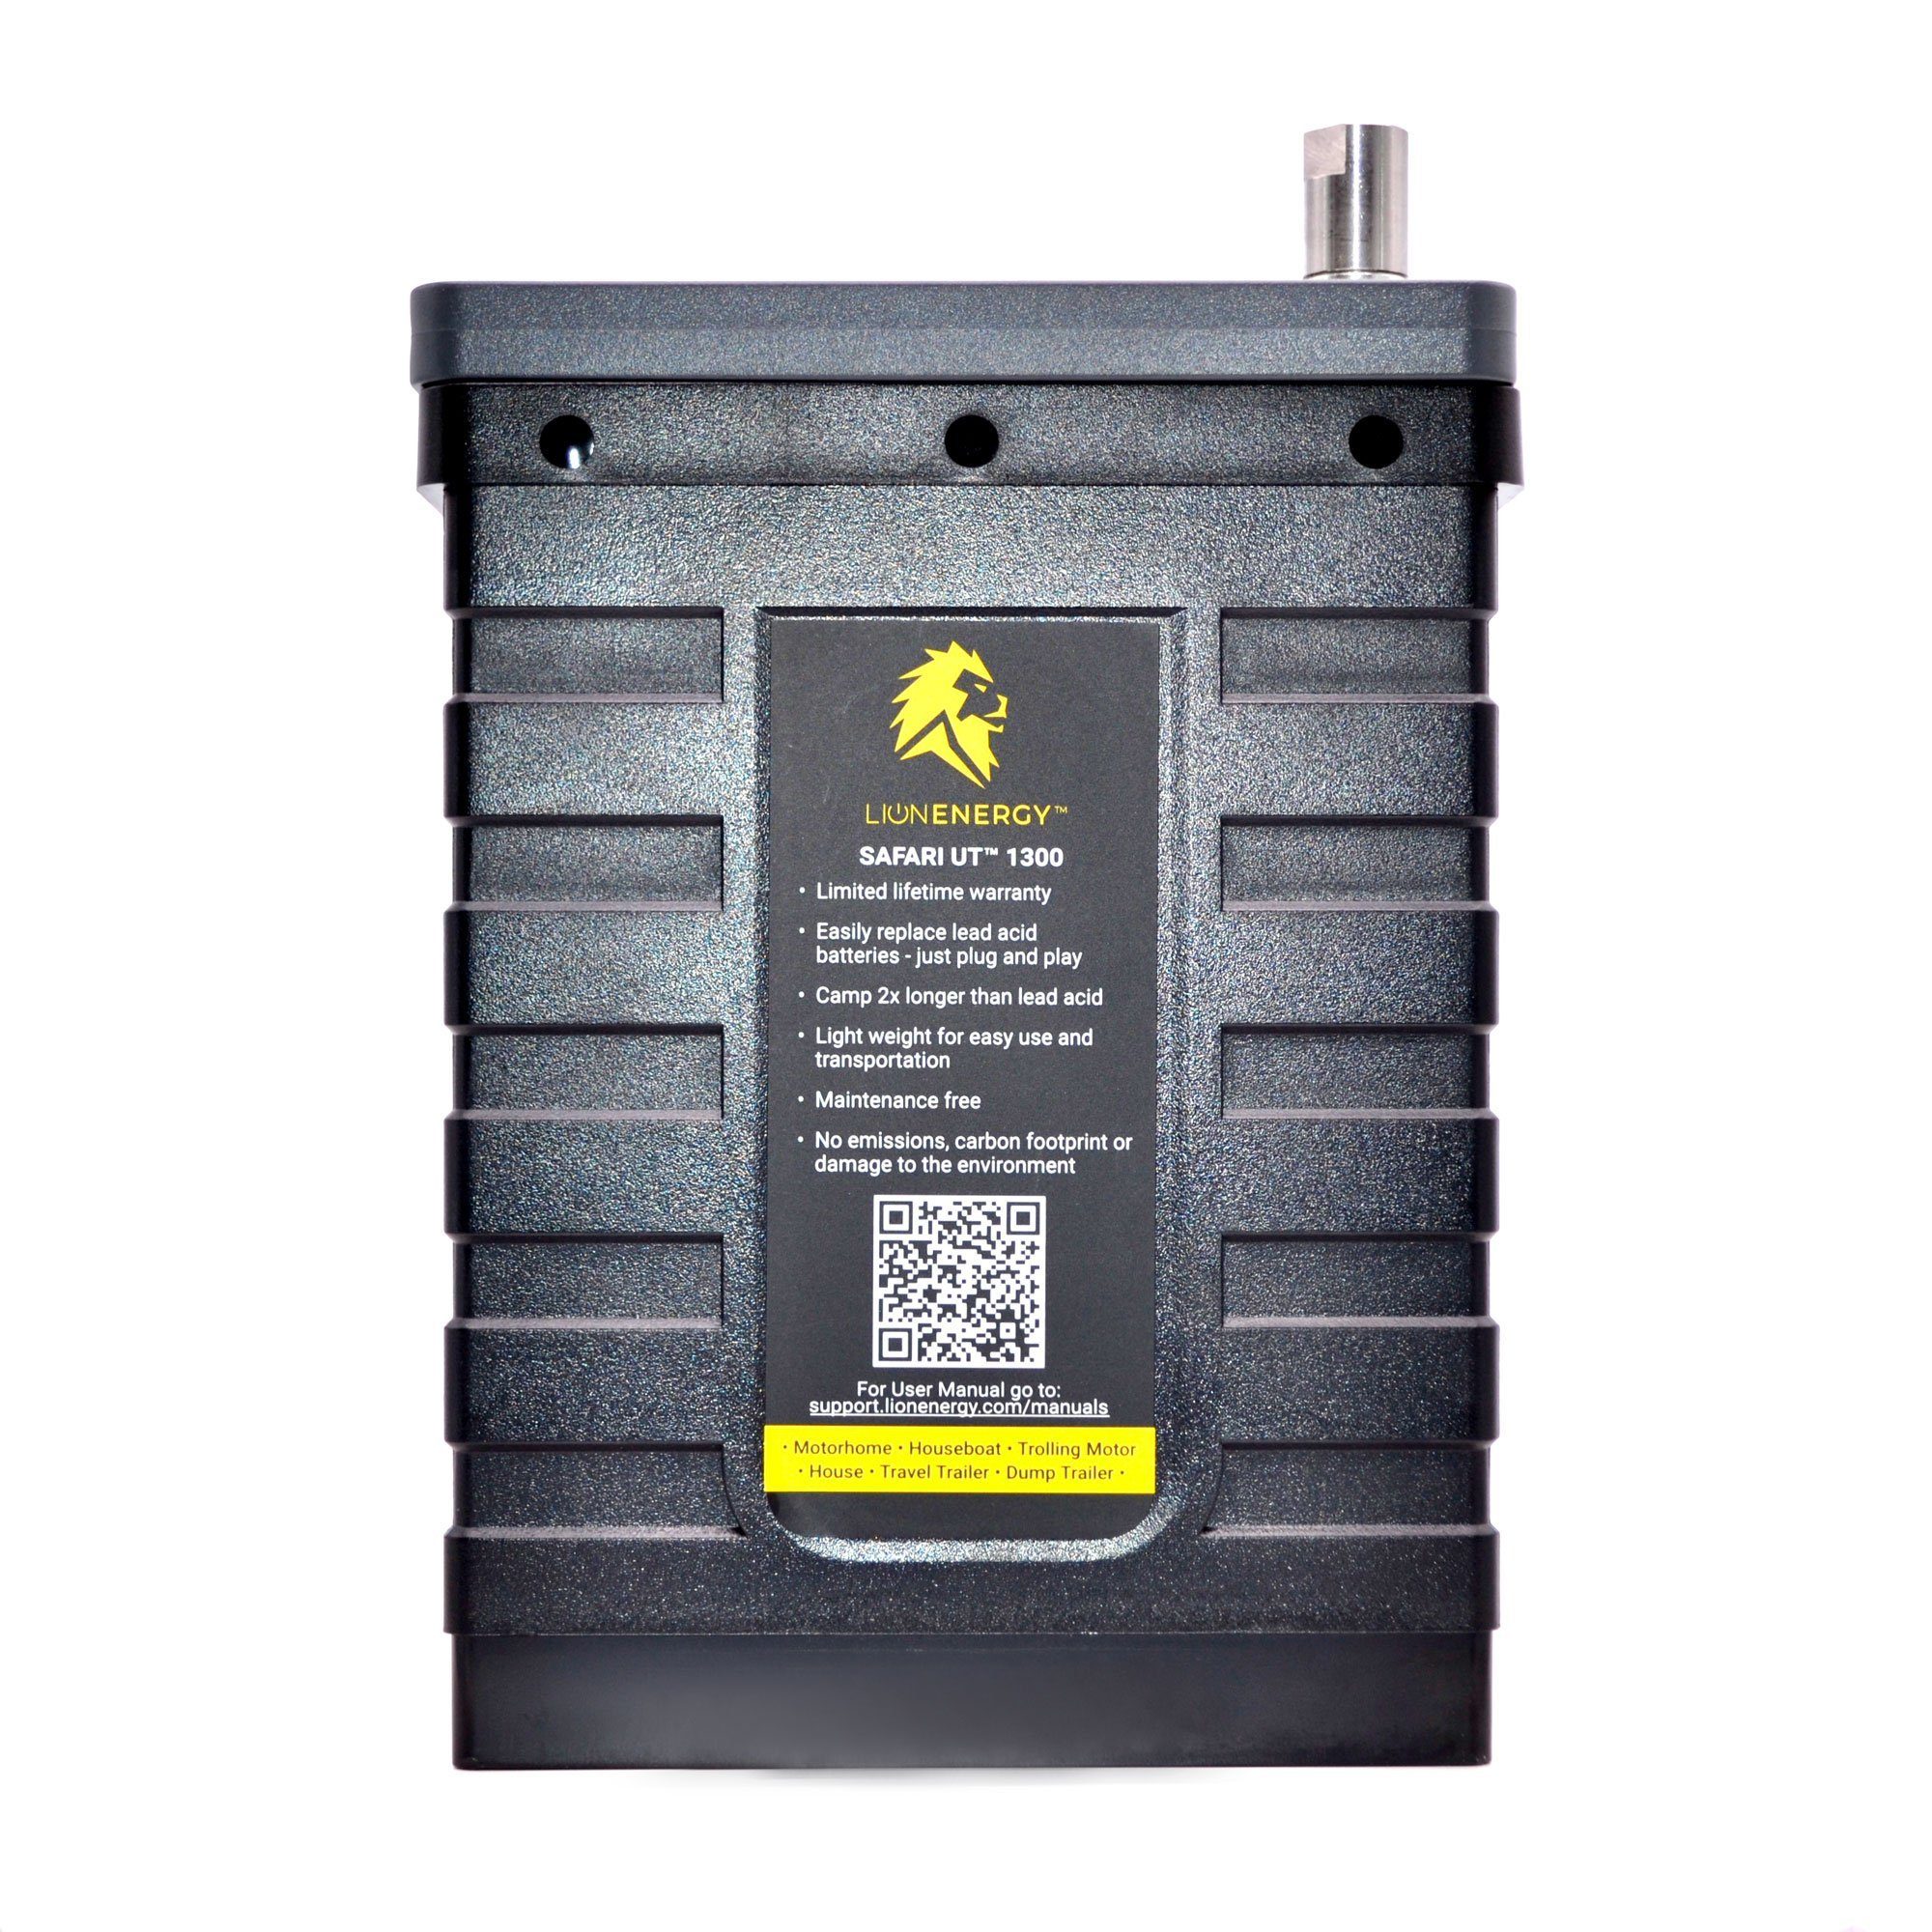 Lion Energy Safari UT 1300 150A Battery